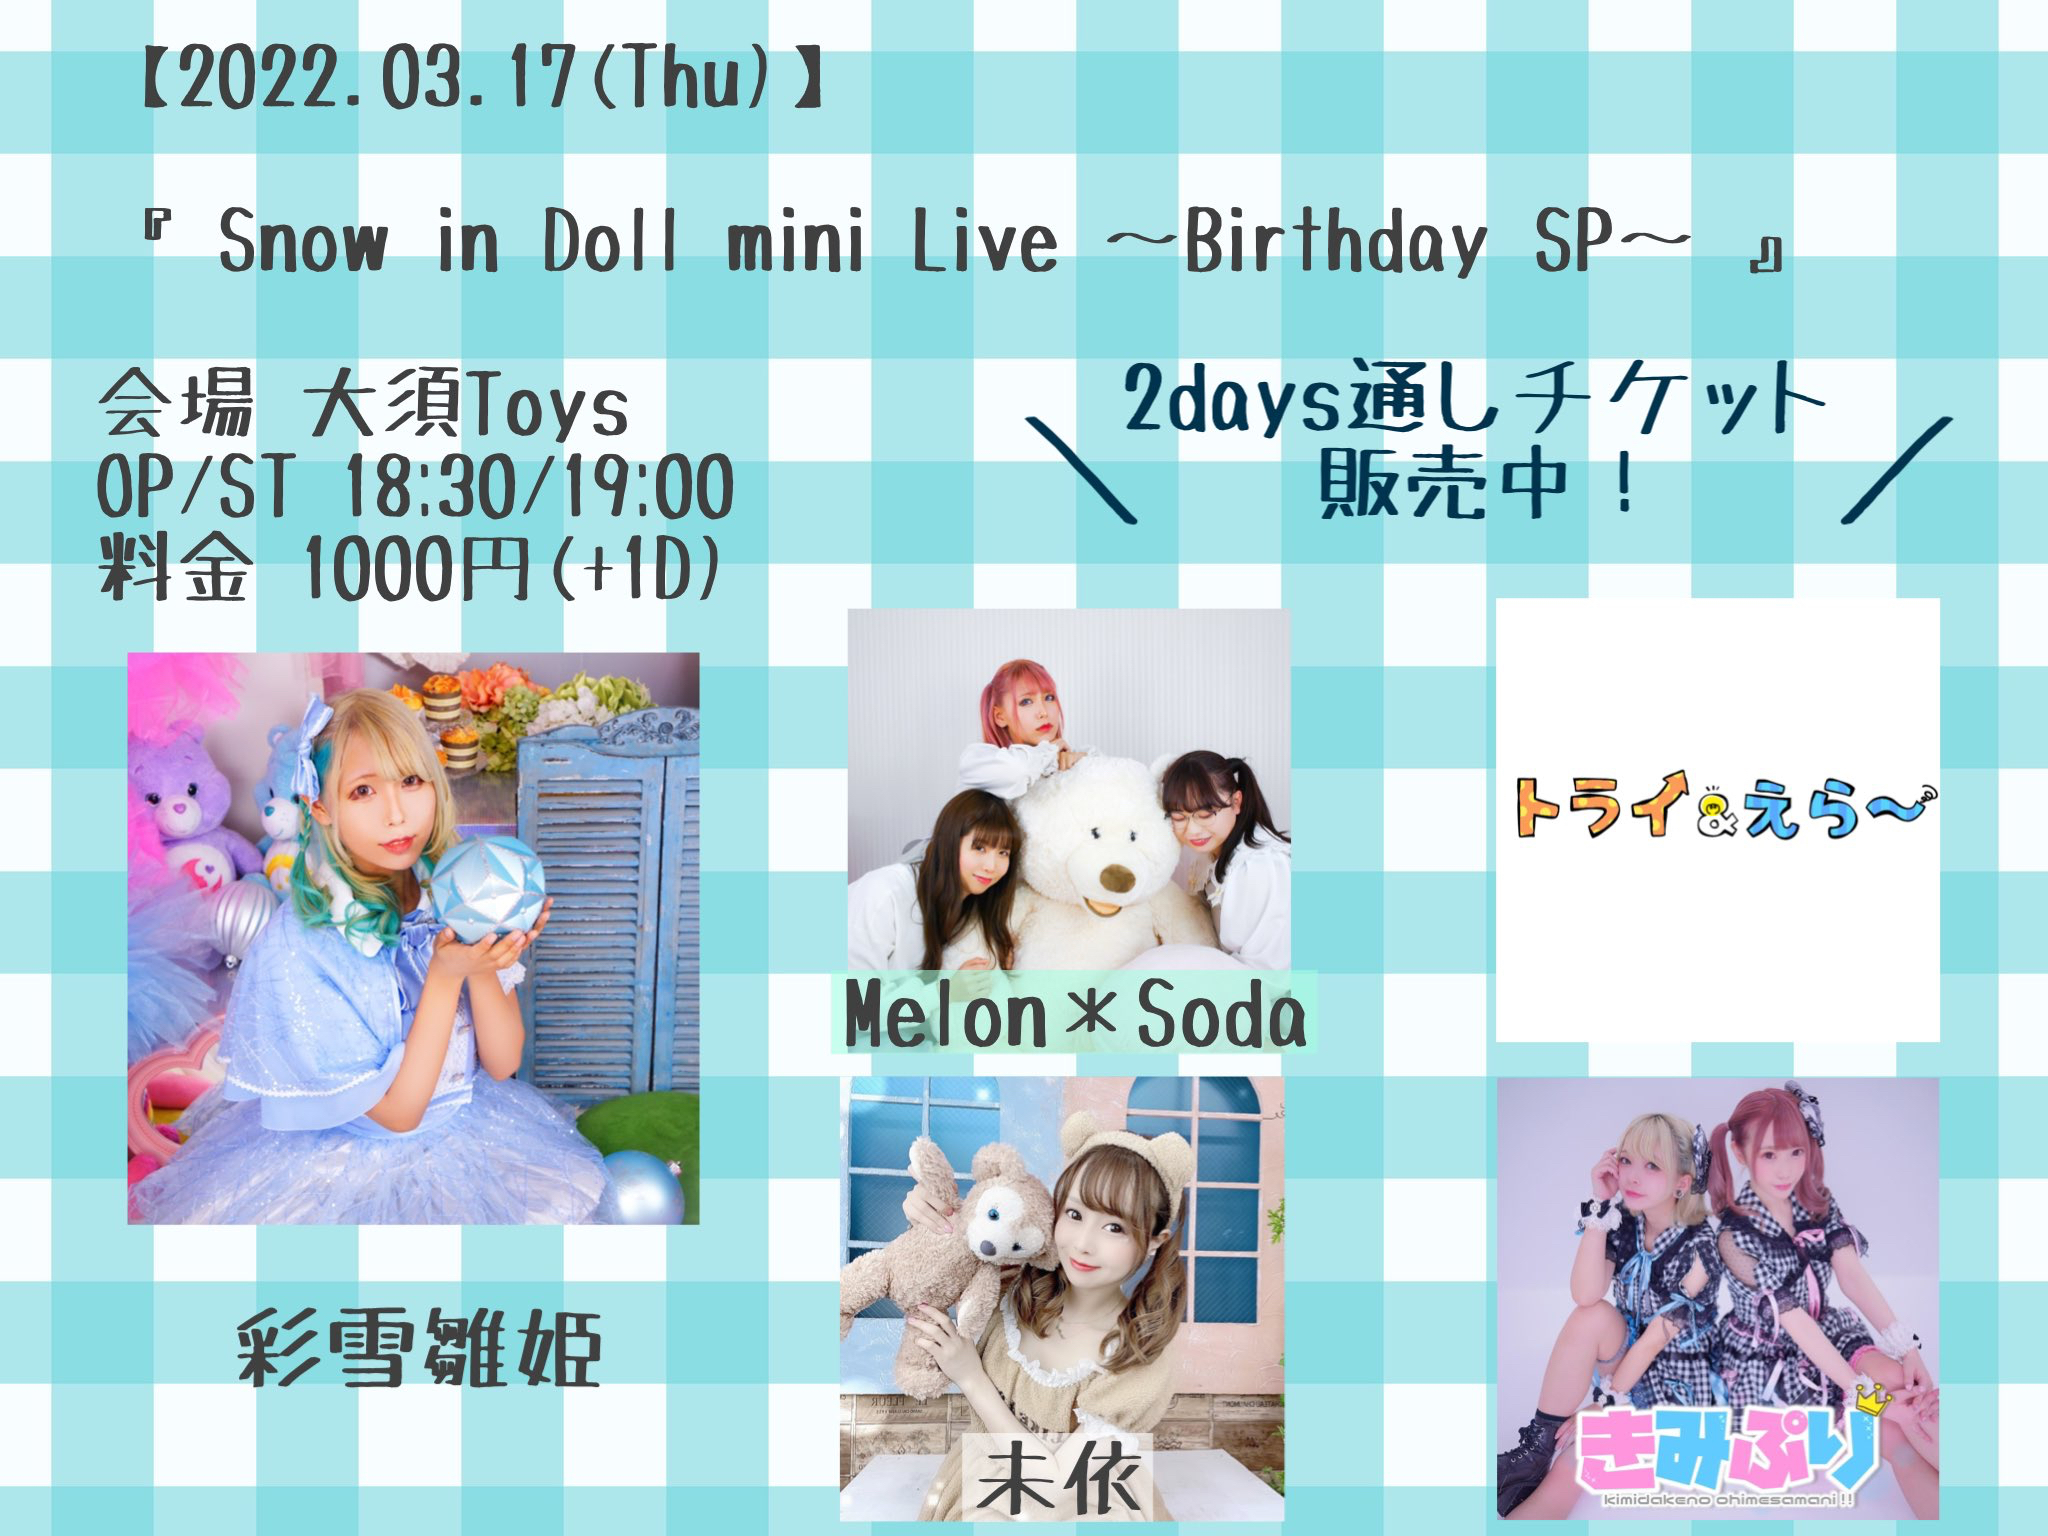 Snow in Doll mini Live ~Birthday SP~